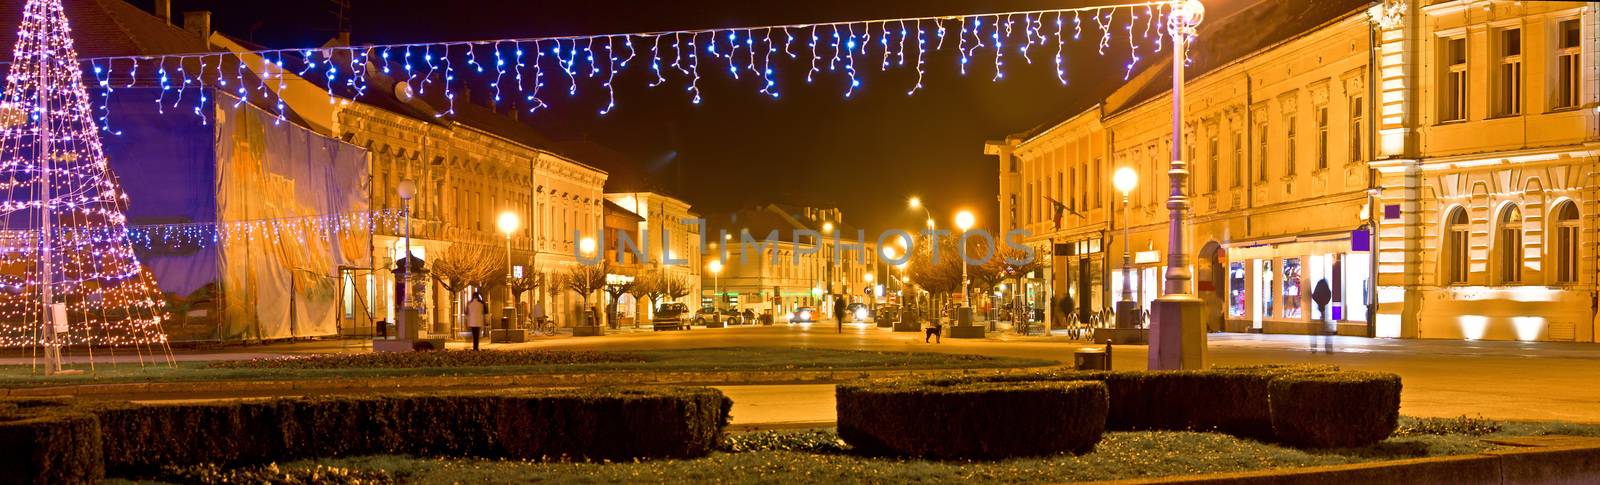 Town of Koprivnica Christmas panorama, Podravina region, Croatia